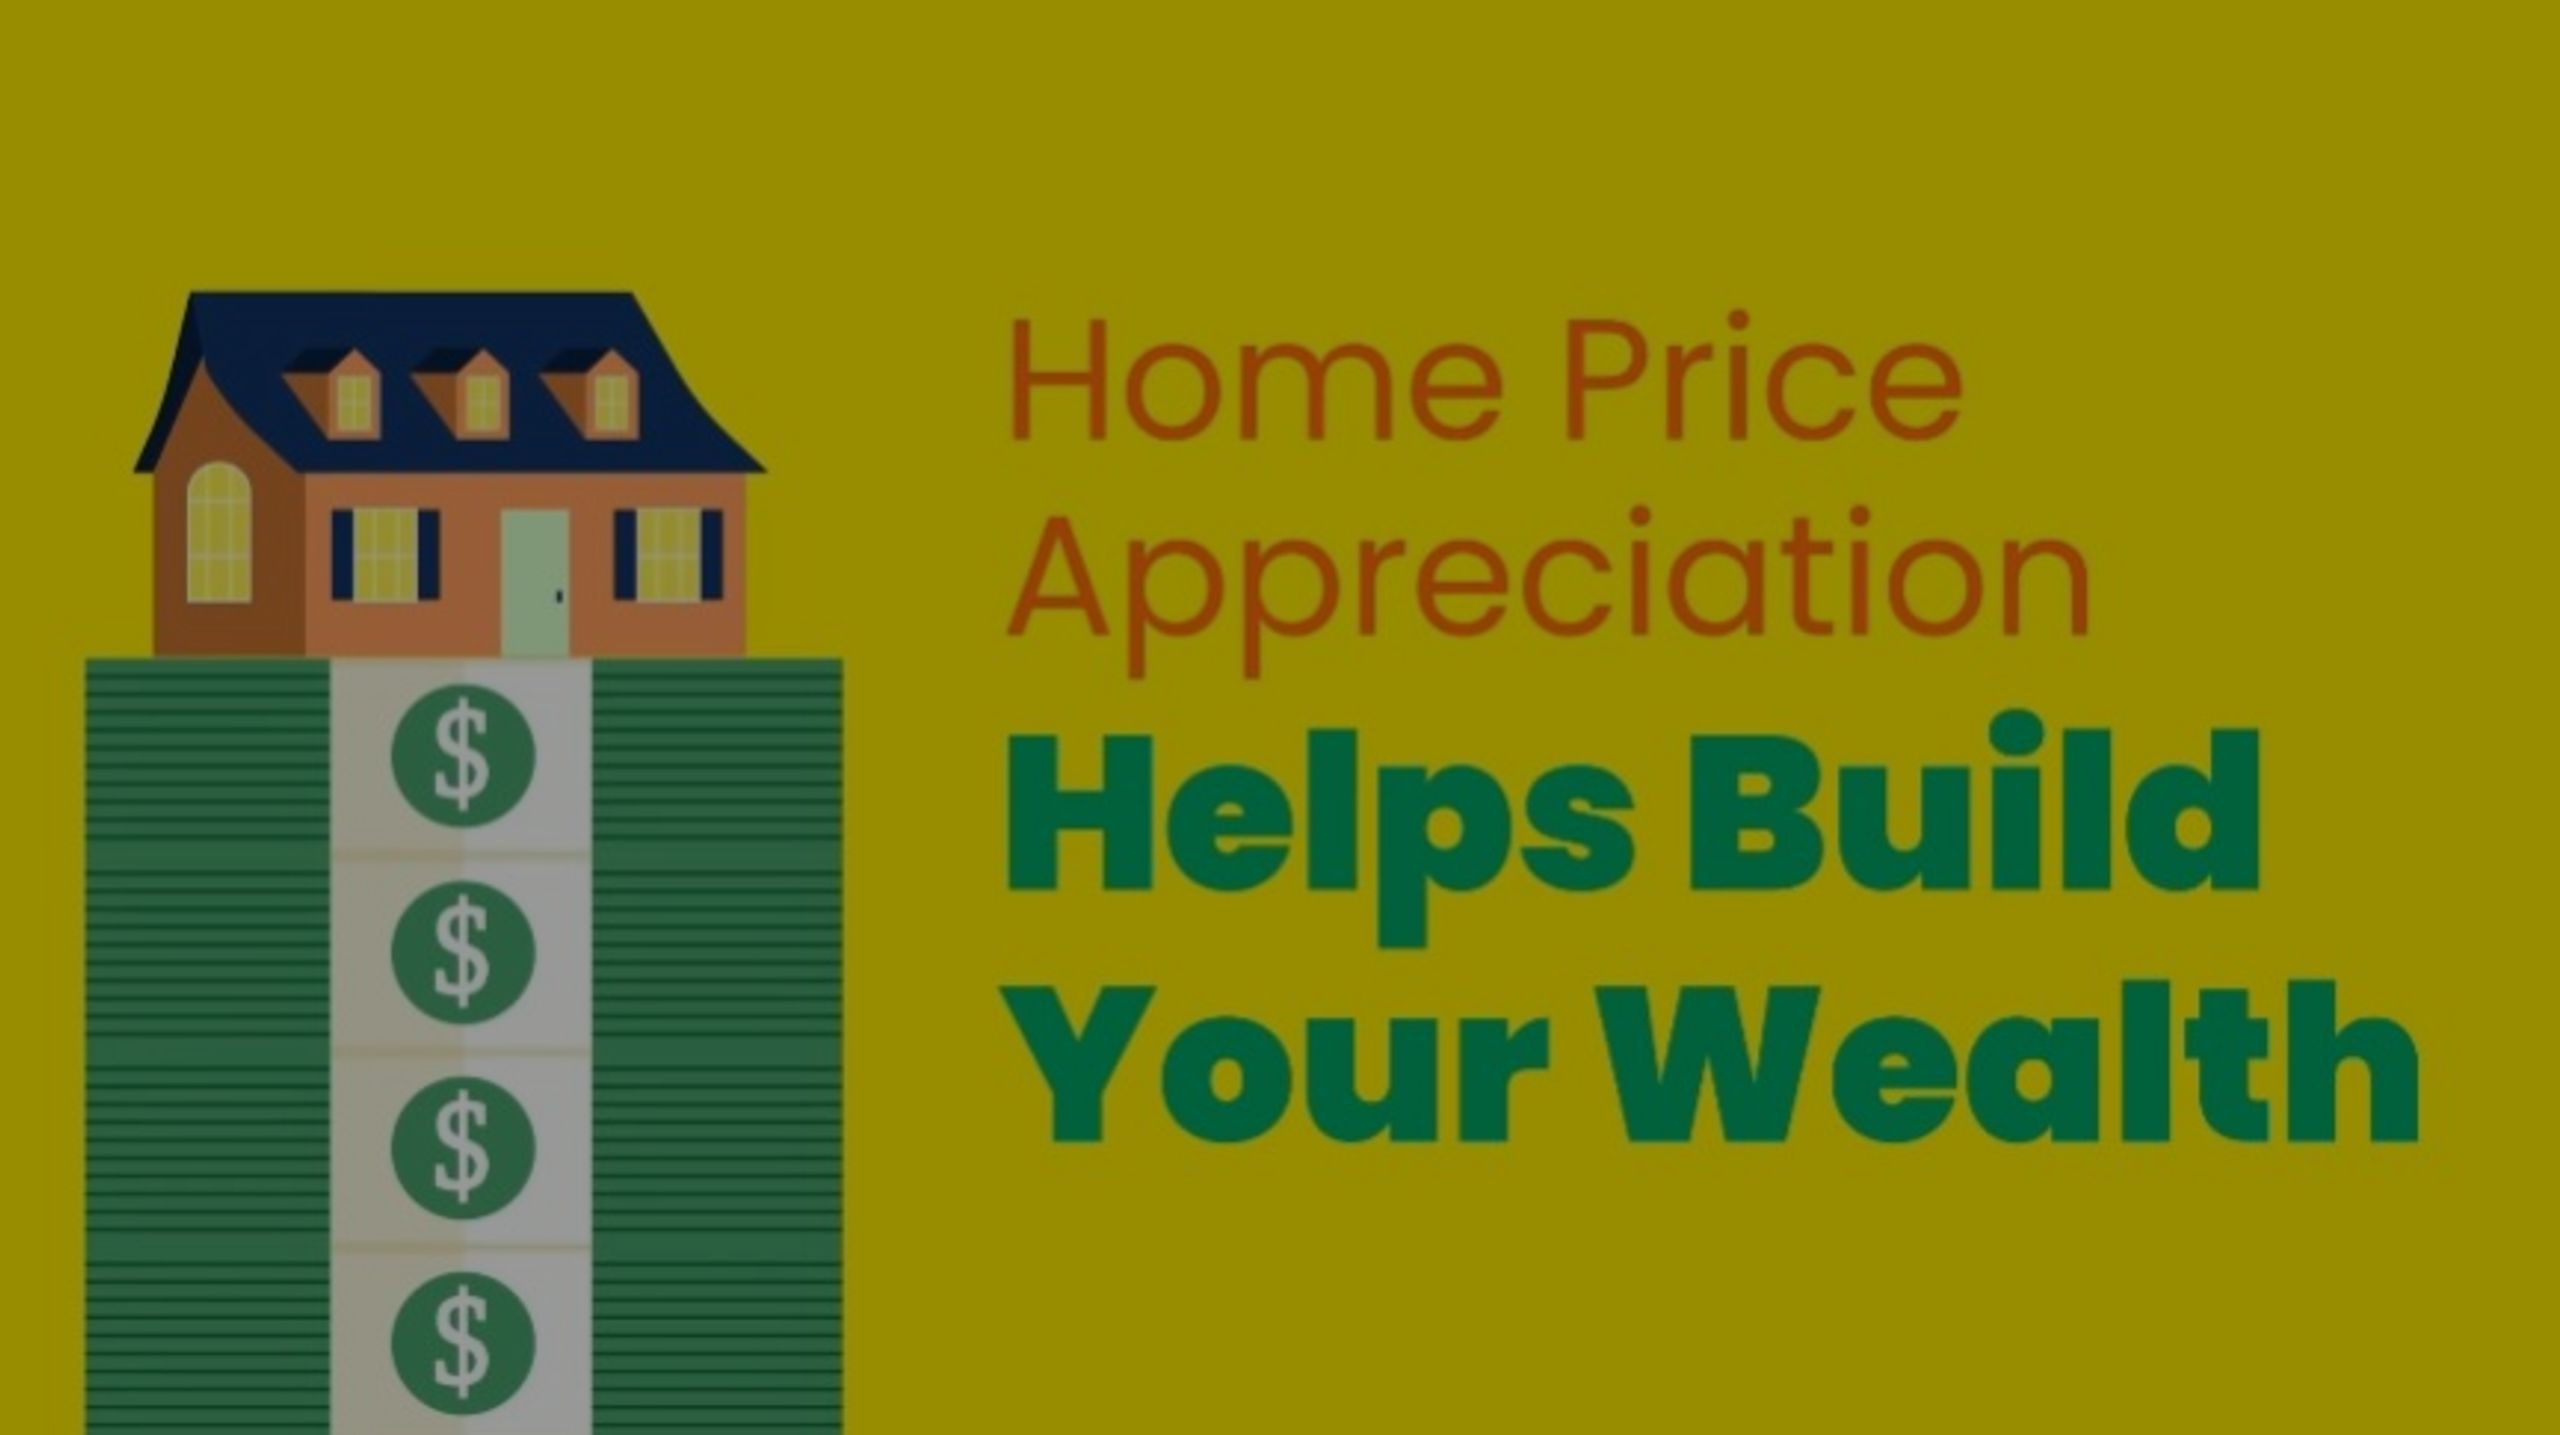 Home Price Appreciation Helps Build Your Wealth